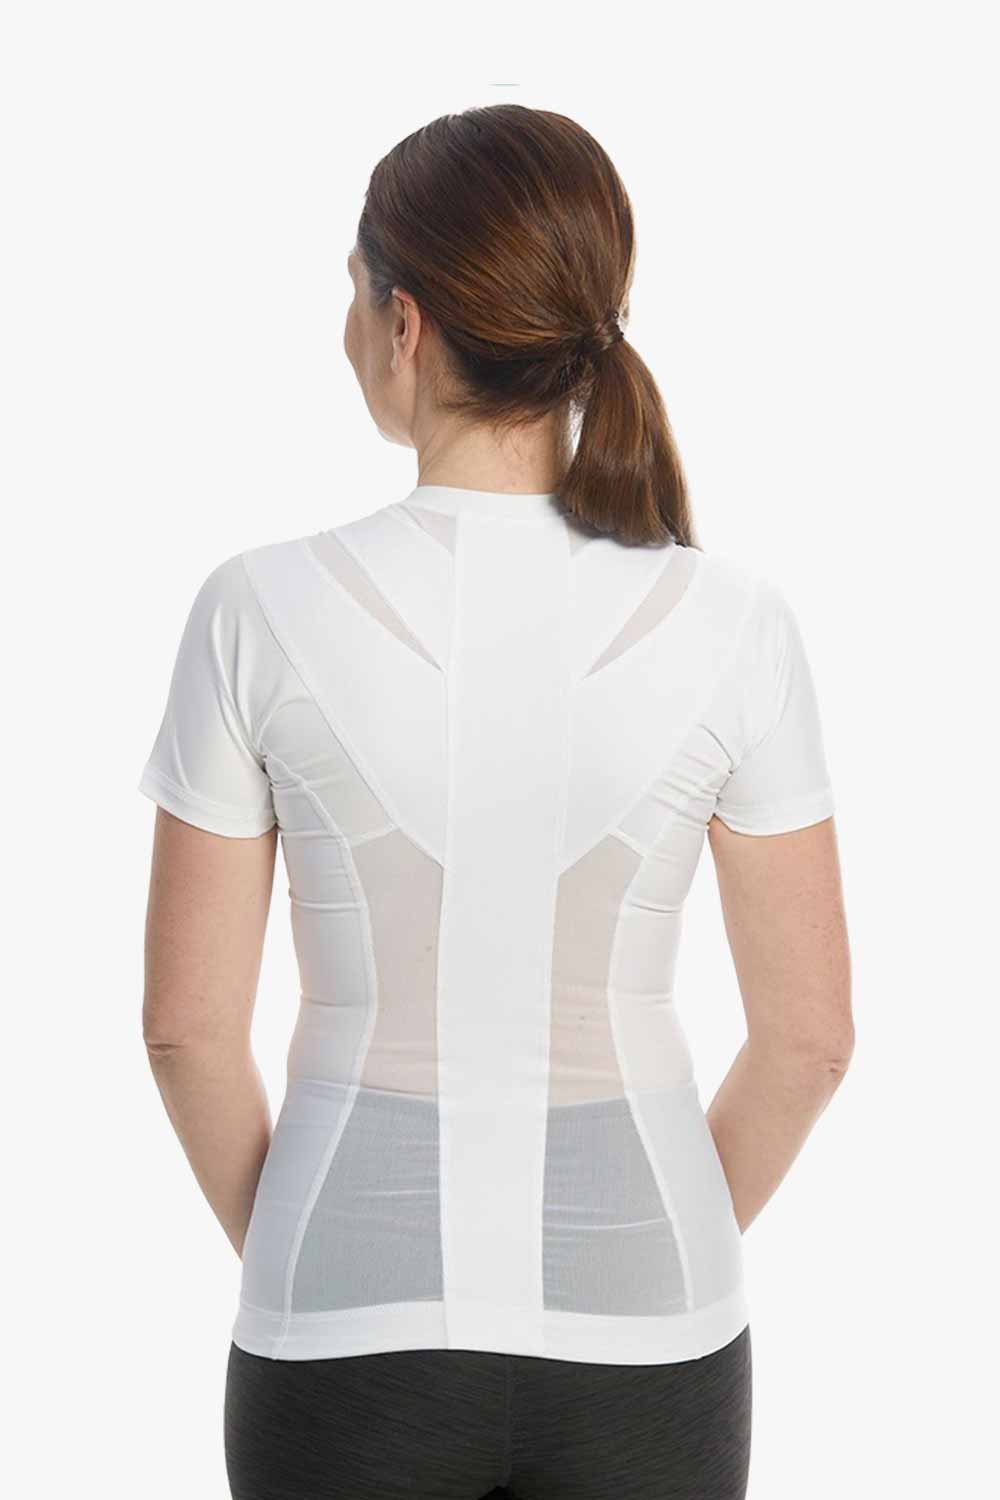 Posture Shirt™ for women (White)